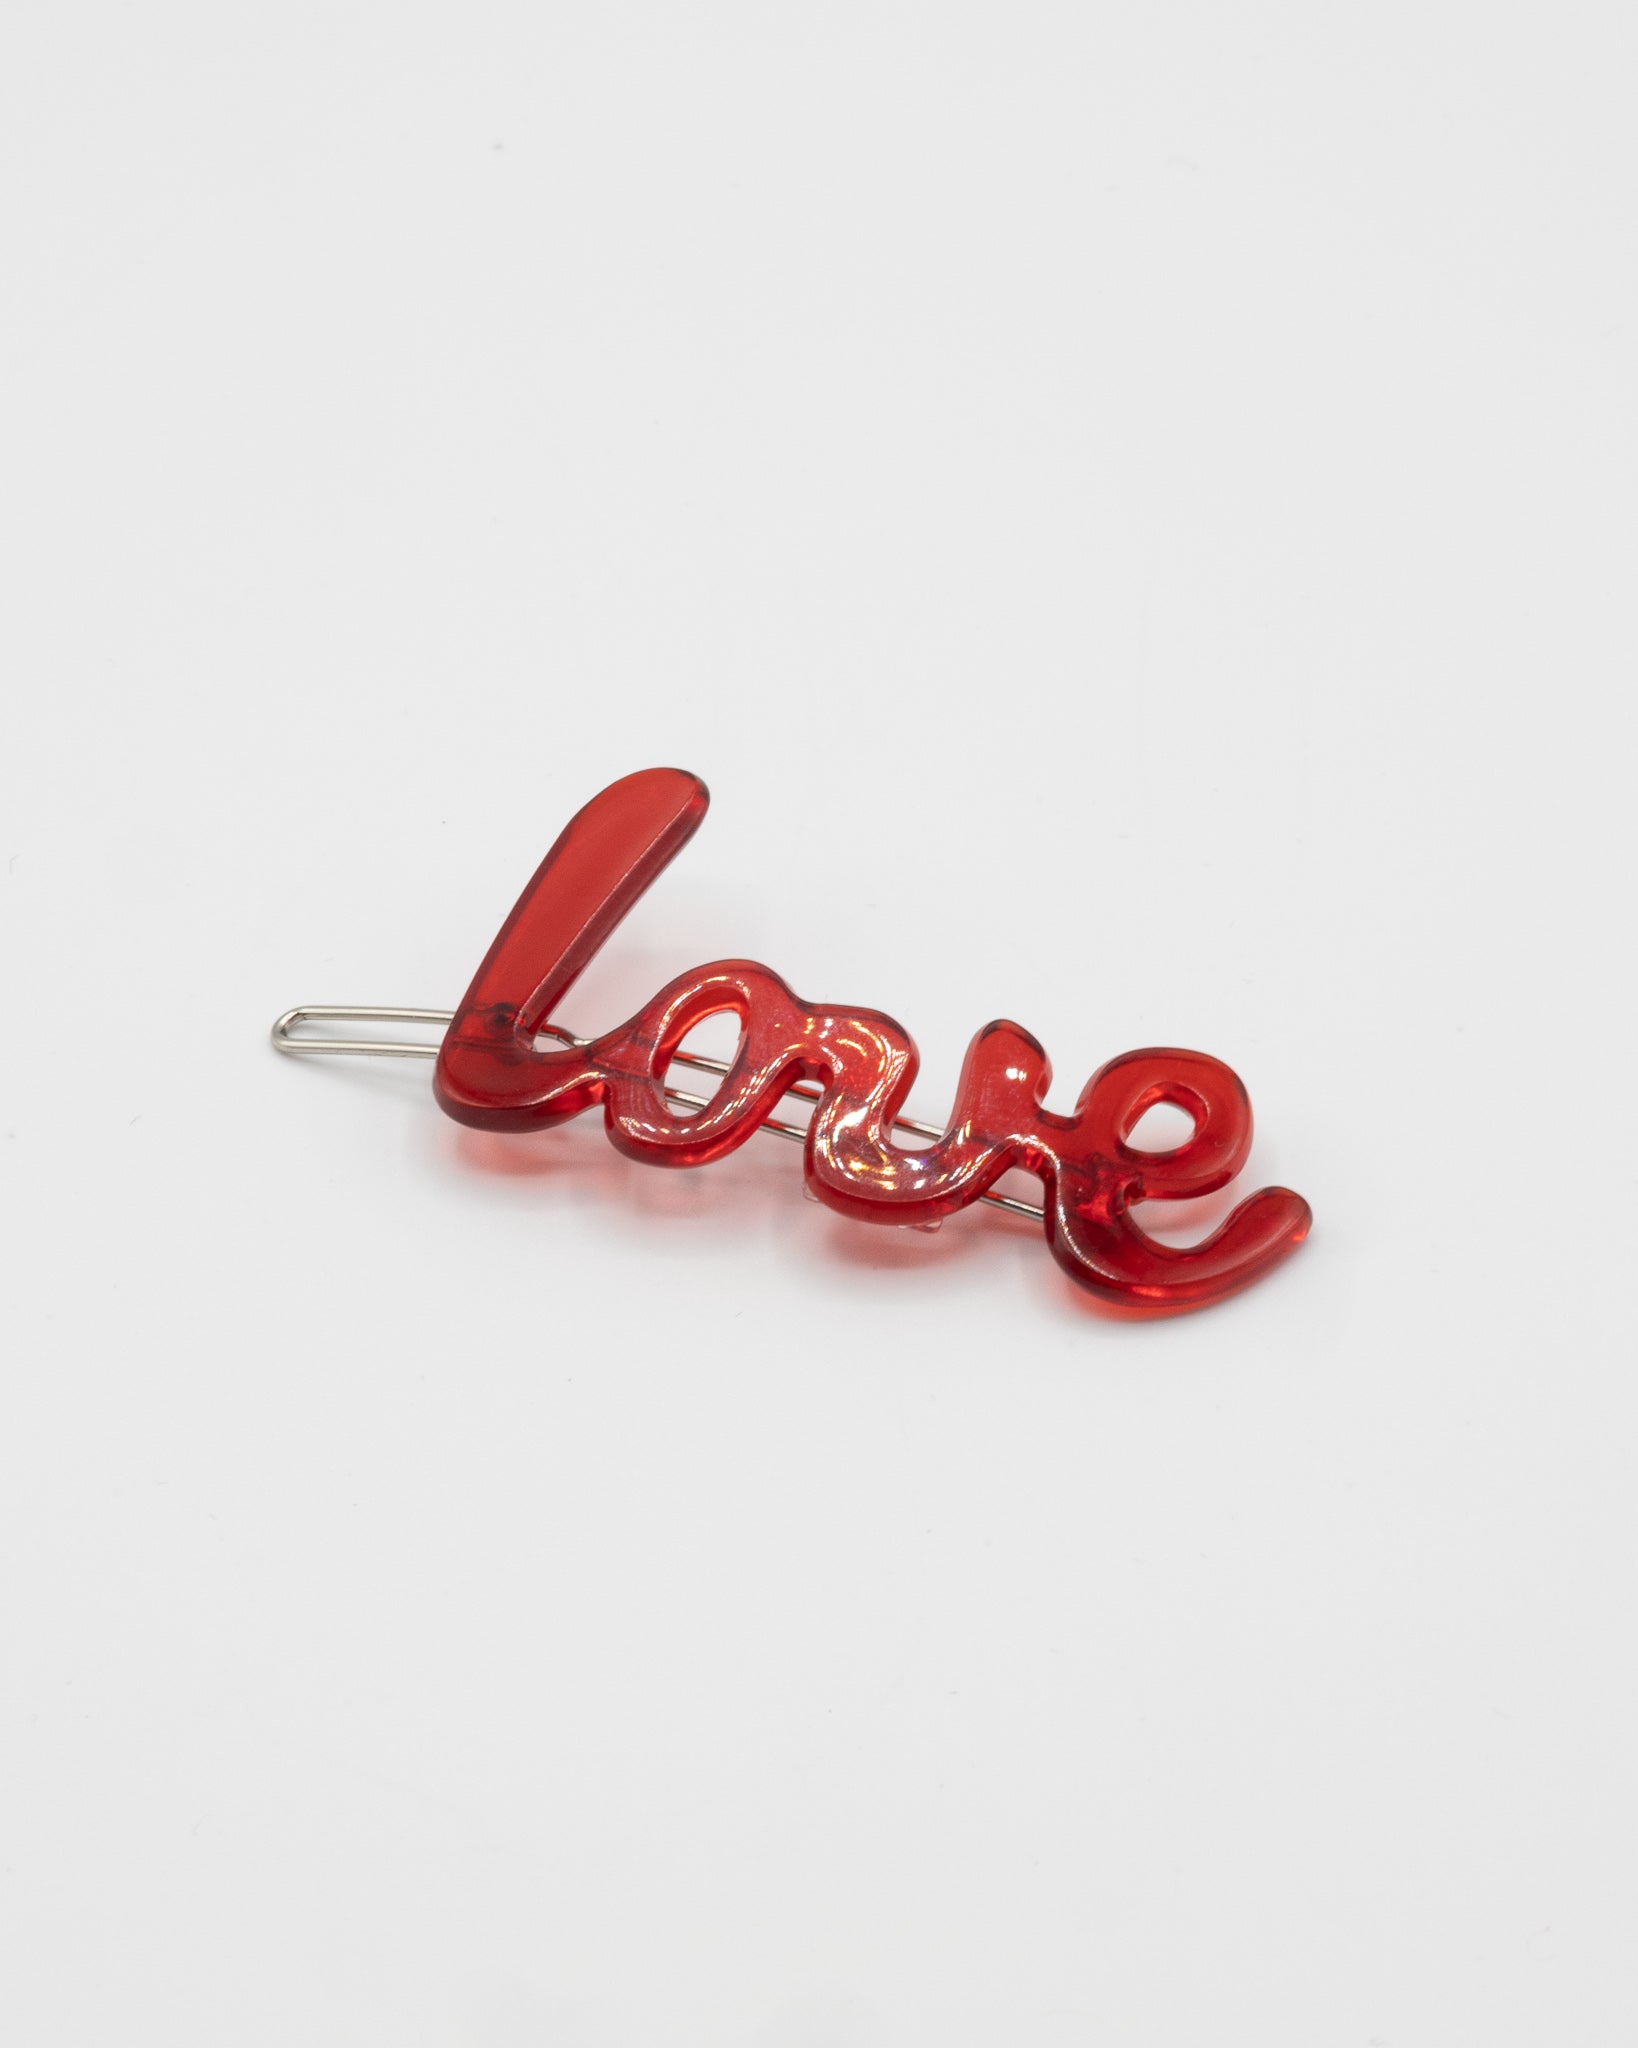 Red 'Love' Hair Clip - Bad Handwriting